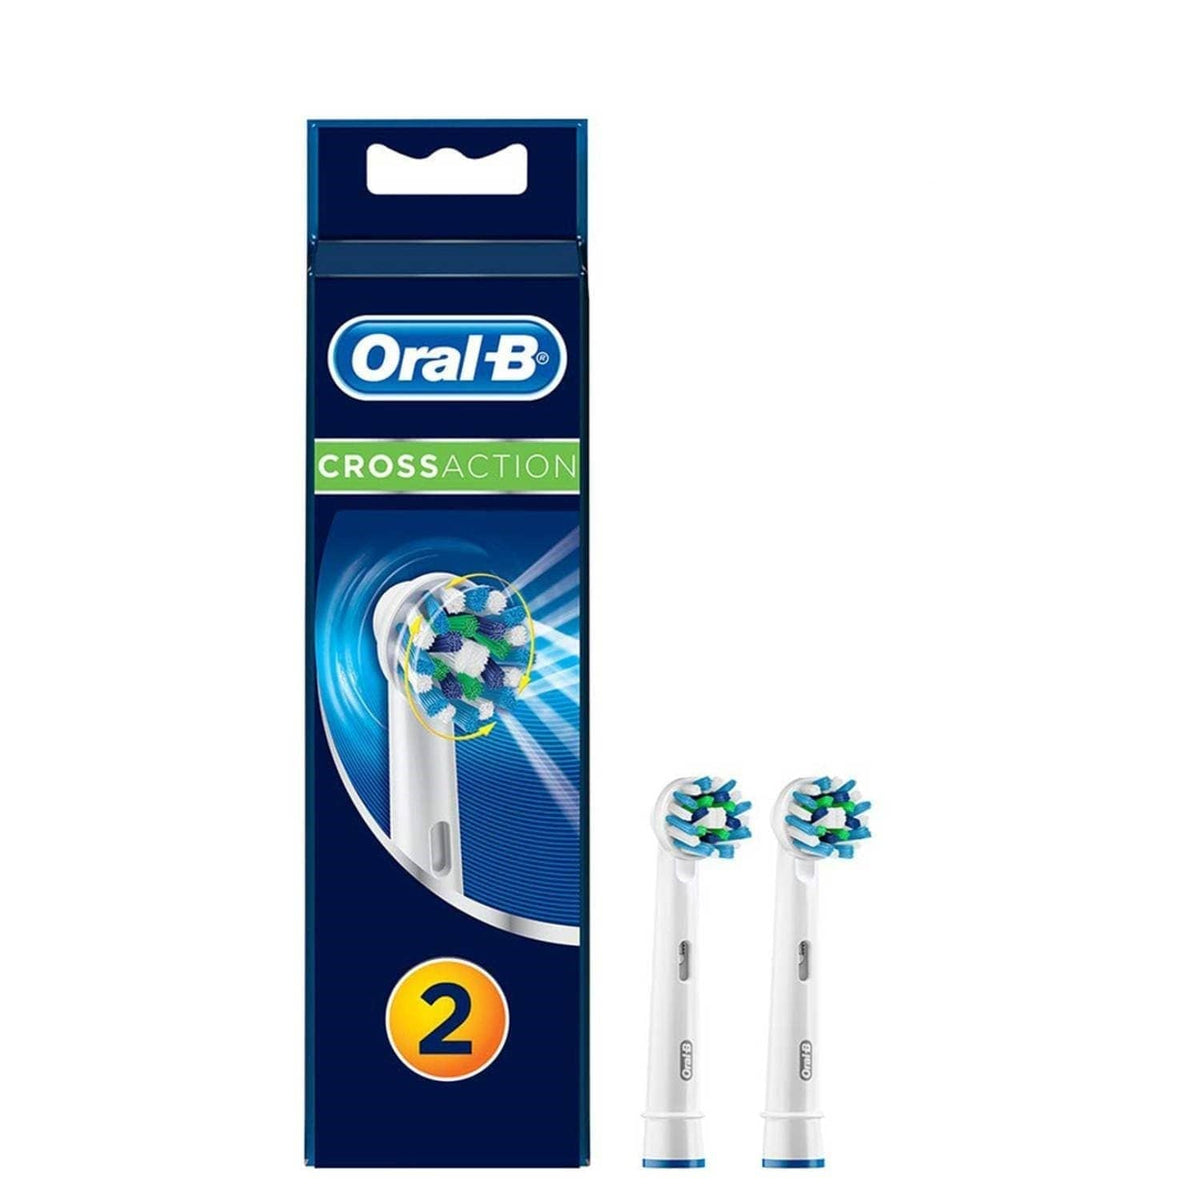 Oral B CrossAction Brush Head EB 50-2 Refills - 2 units - Toottoot Singapore